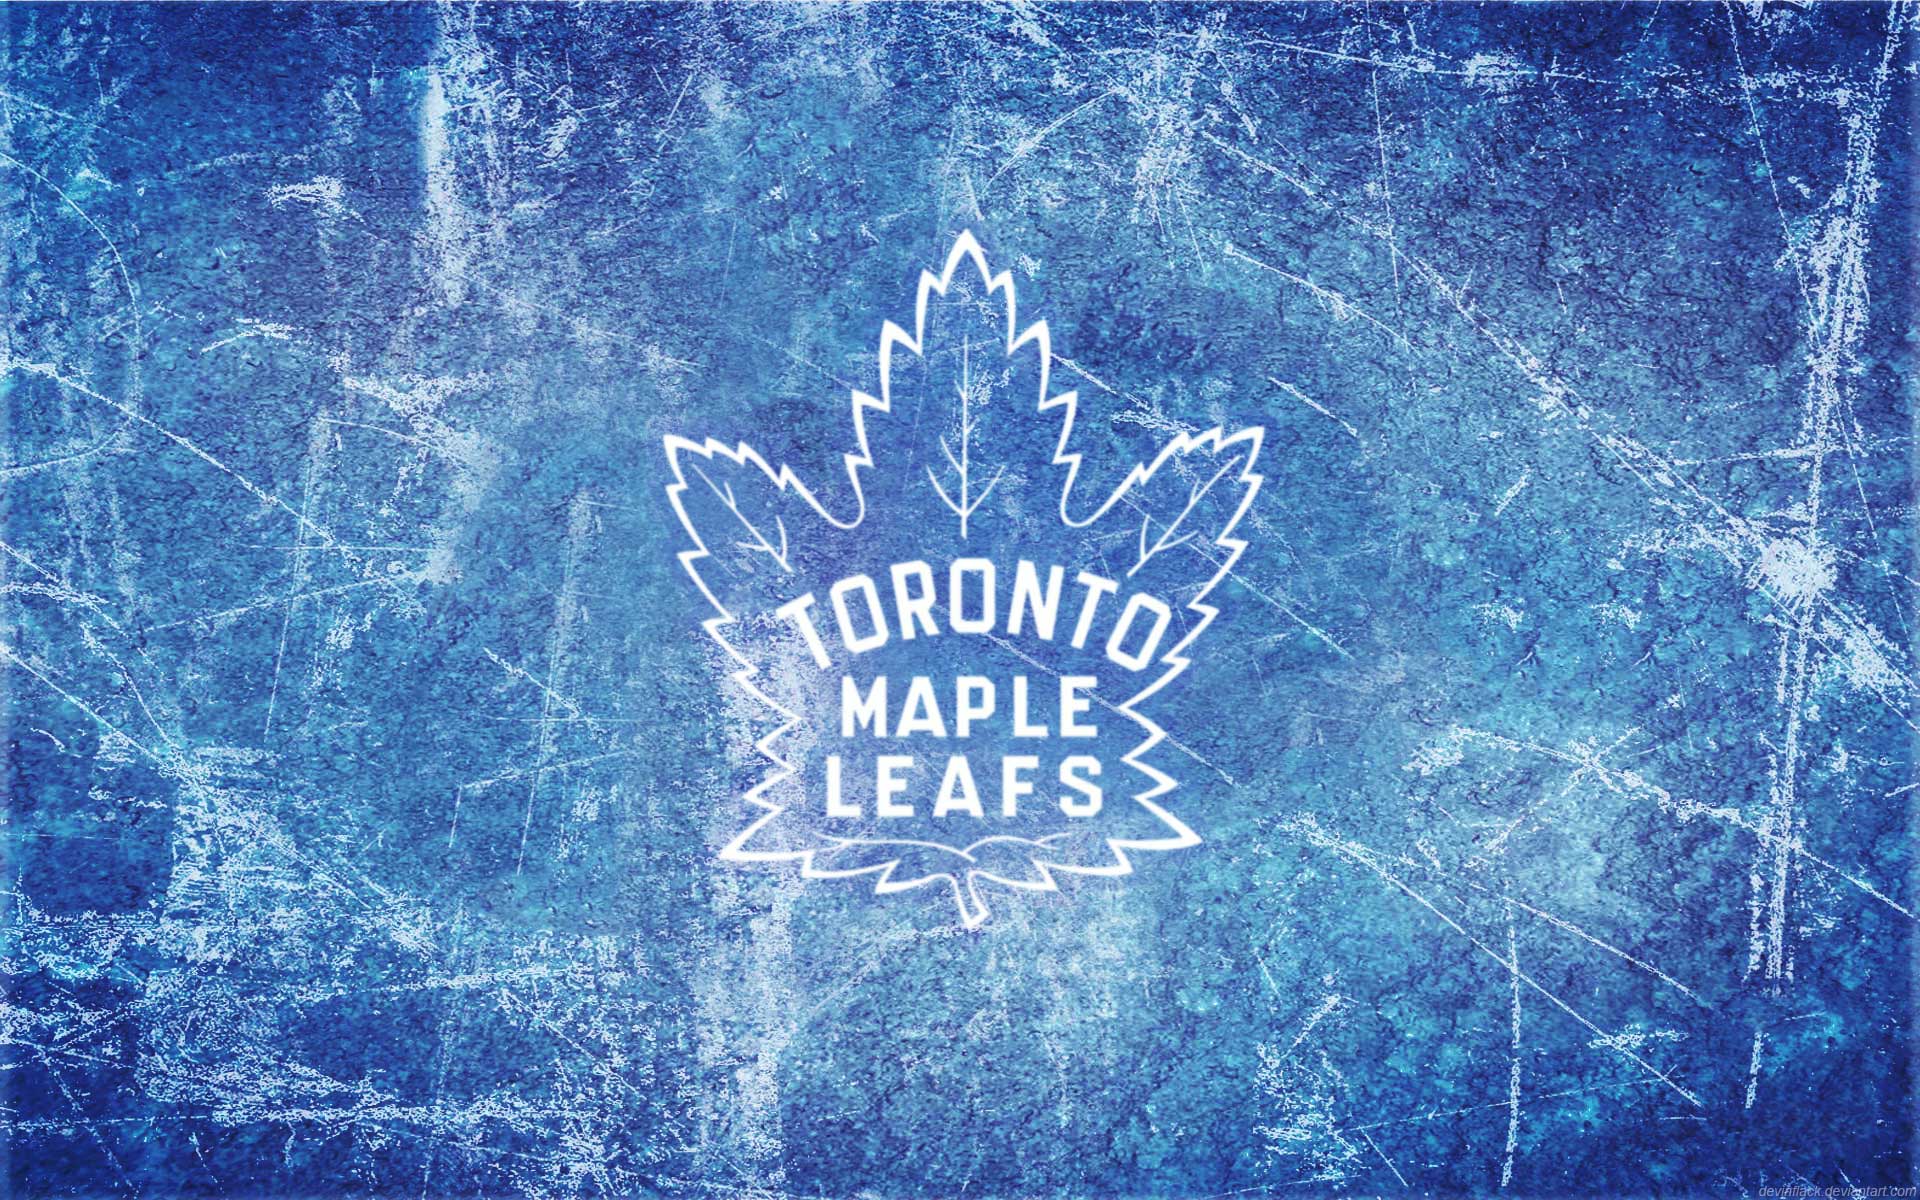 More Toronto Maple Leafs Wallpaper